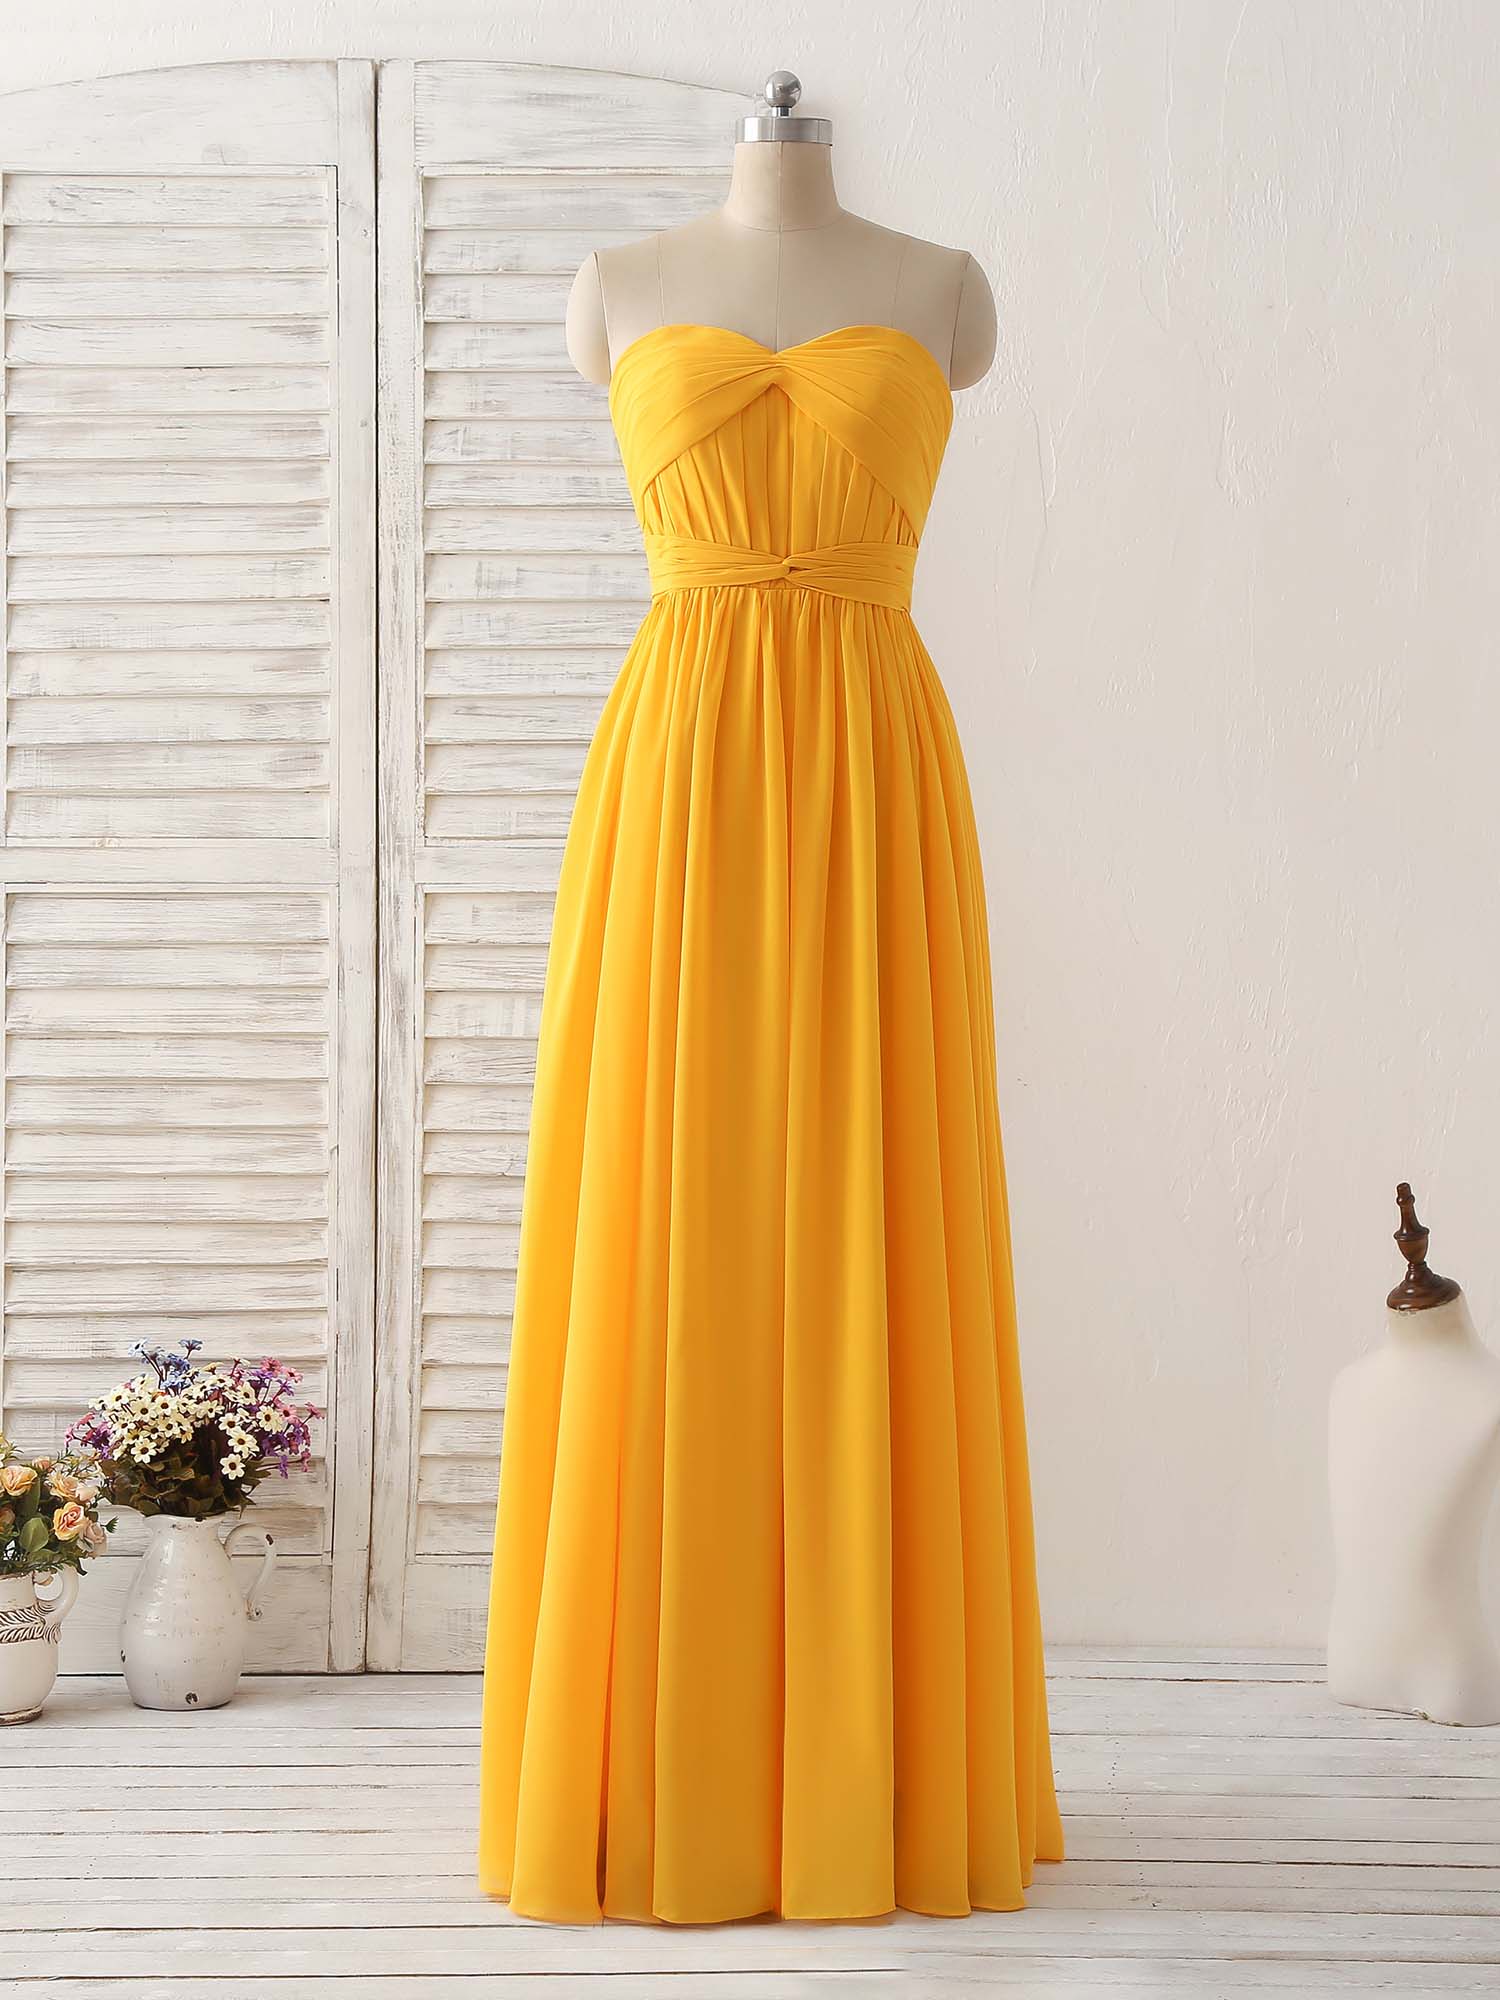 Simple Chiffon Yellow Long Corset Prom Dress Simple Corset Bridesmaid Dress outfit, Formal Dress Ideas